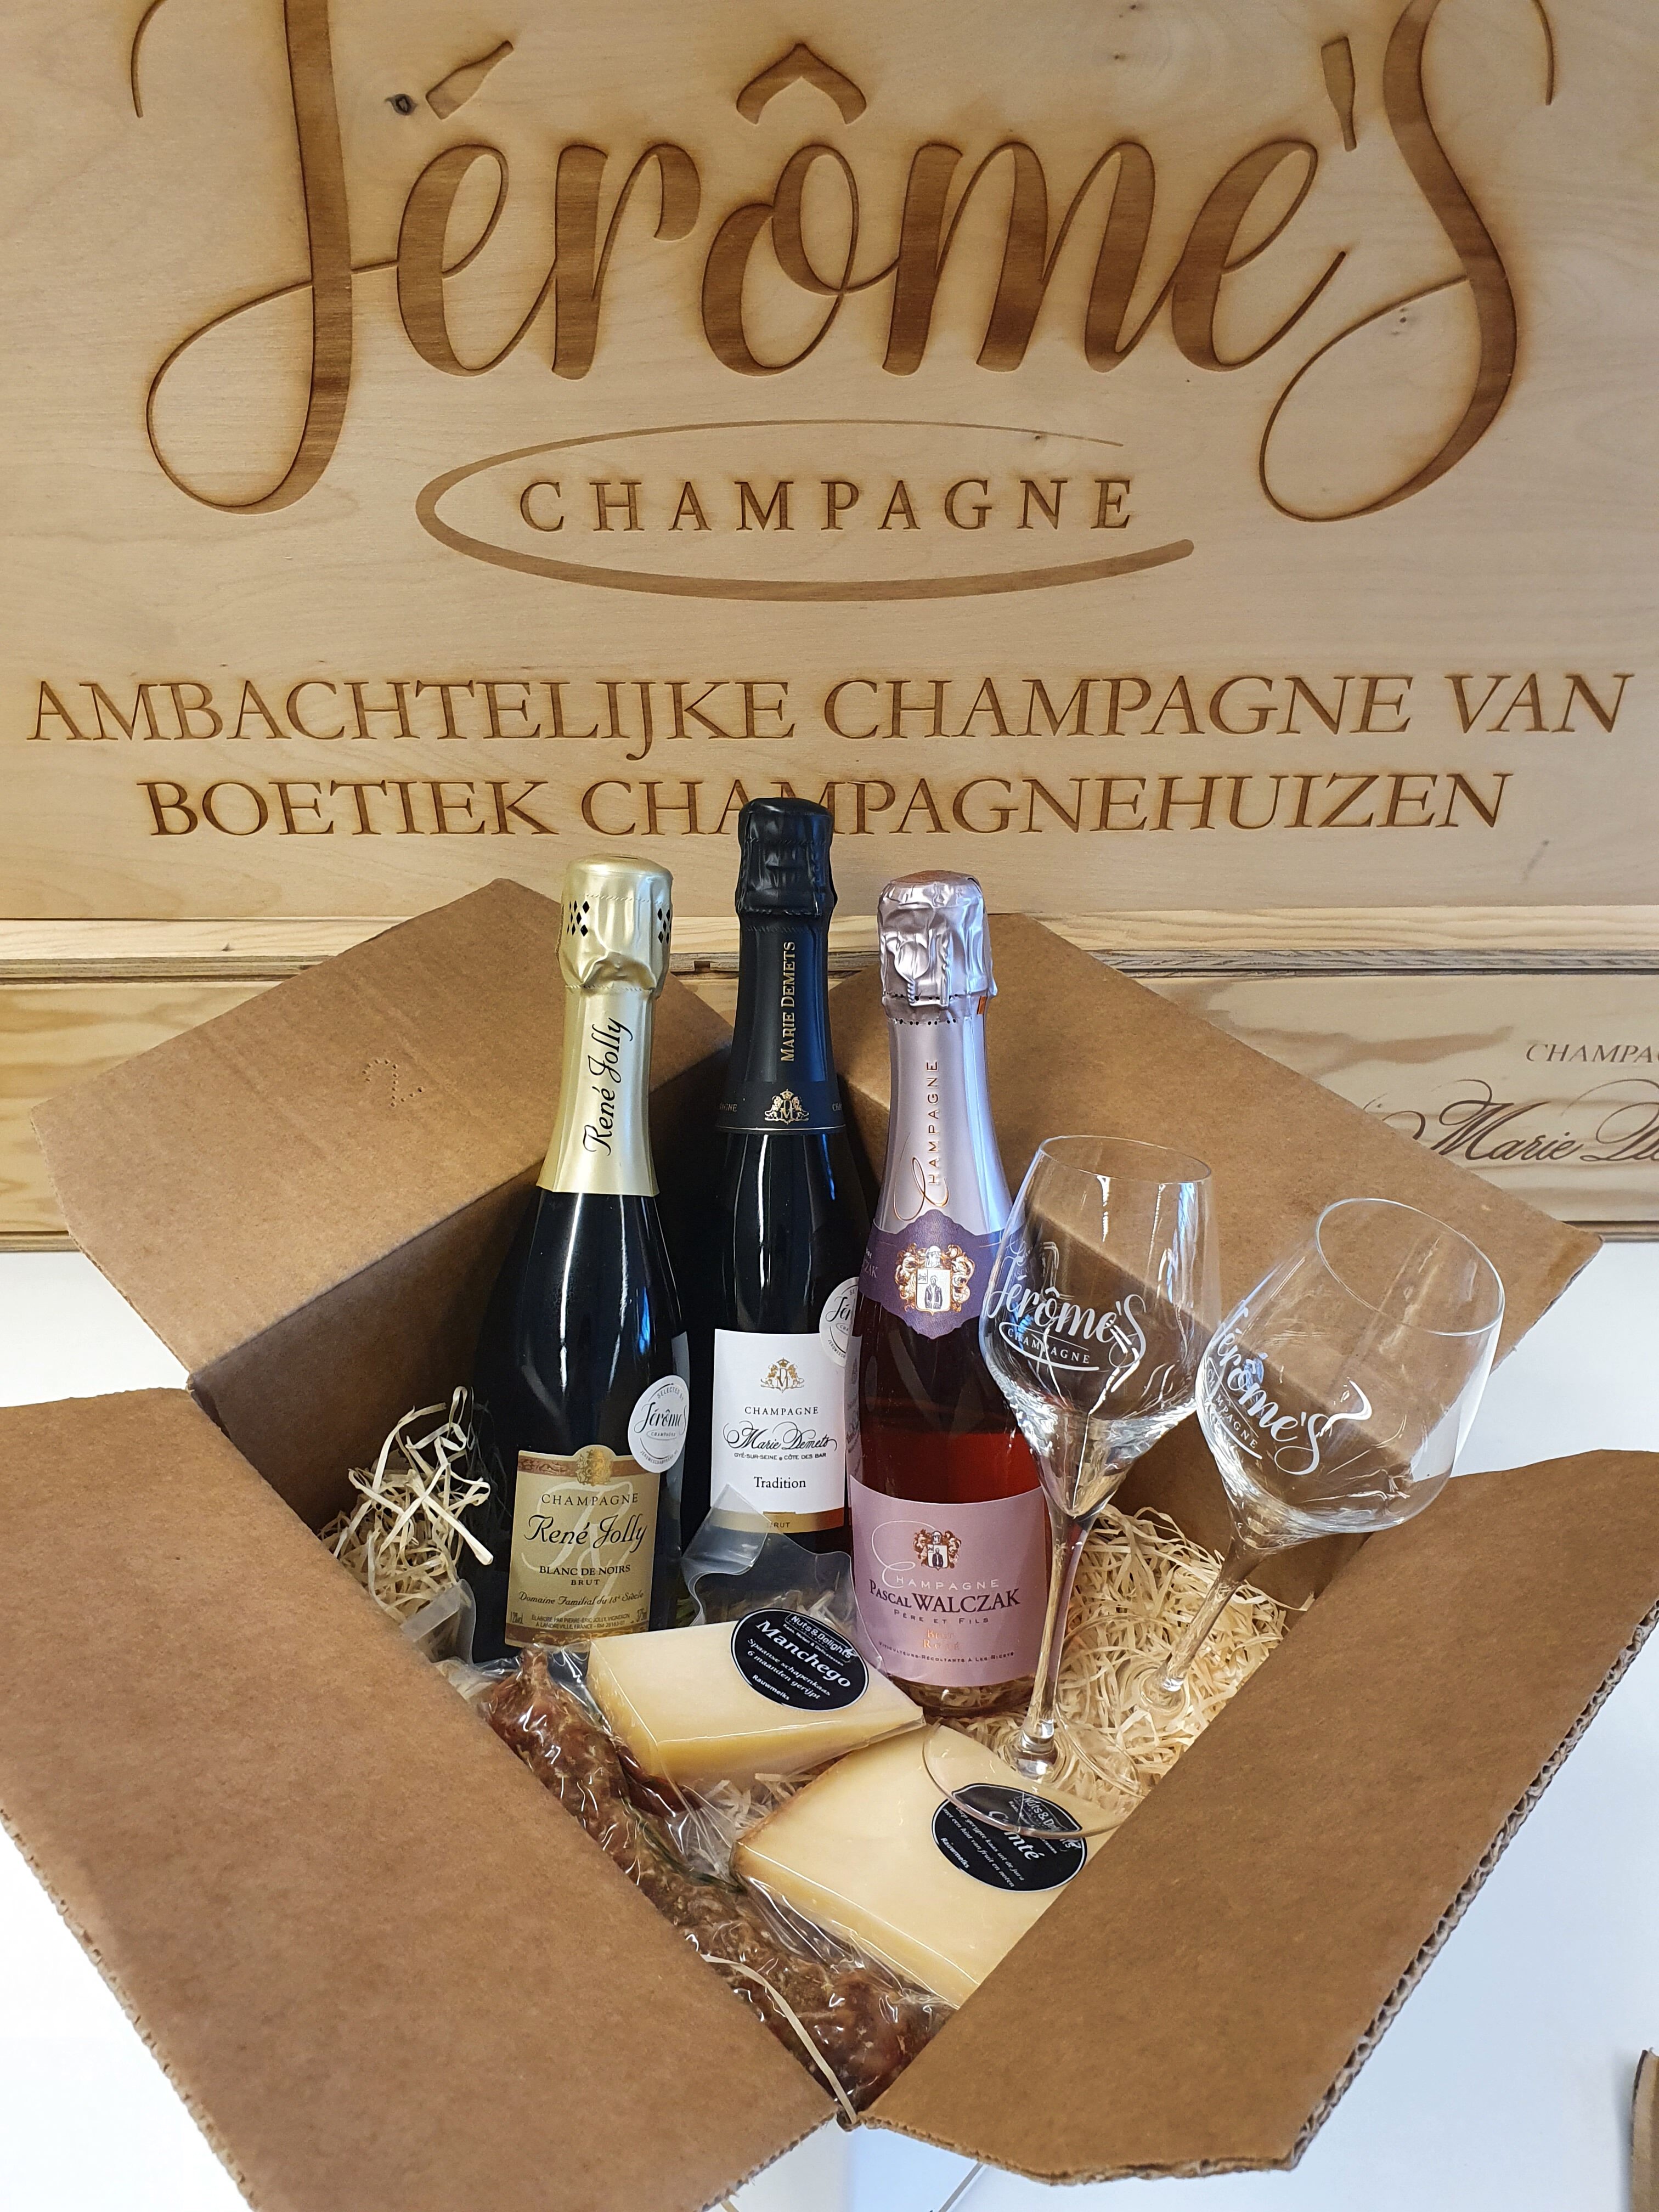 Champagne cadeau - jeromeschampagne.nl